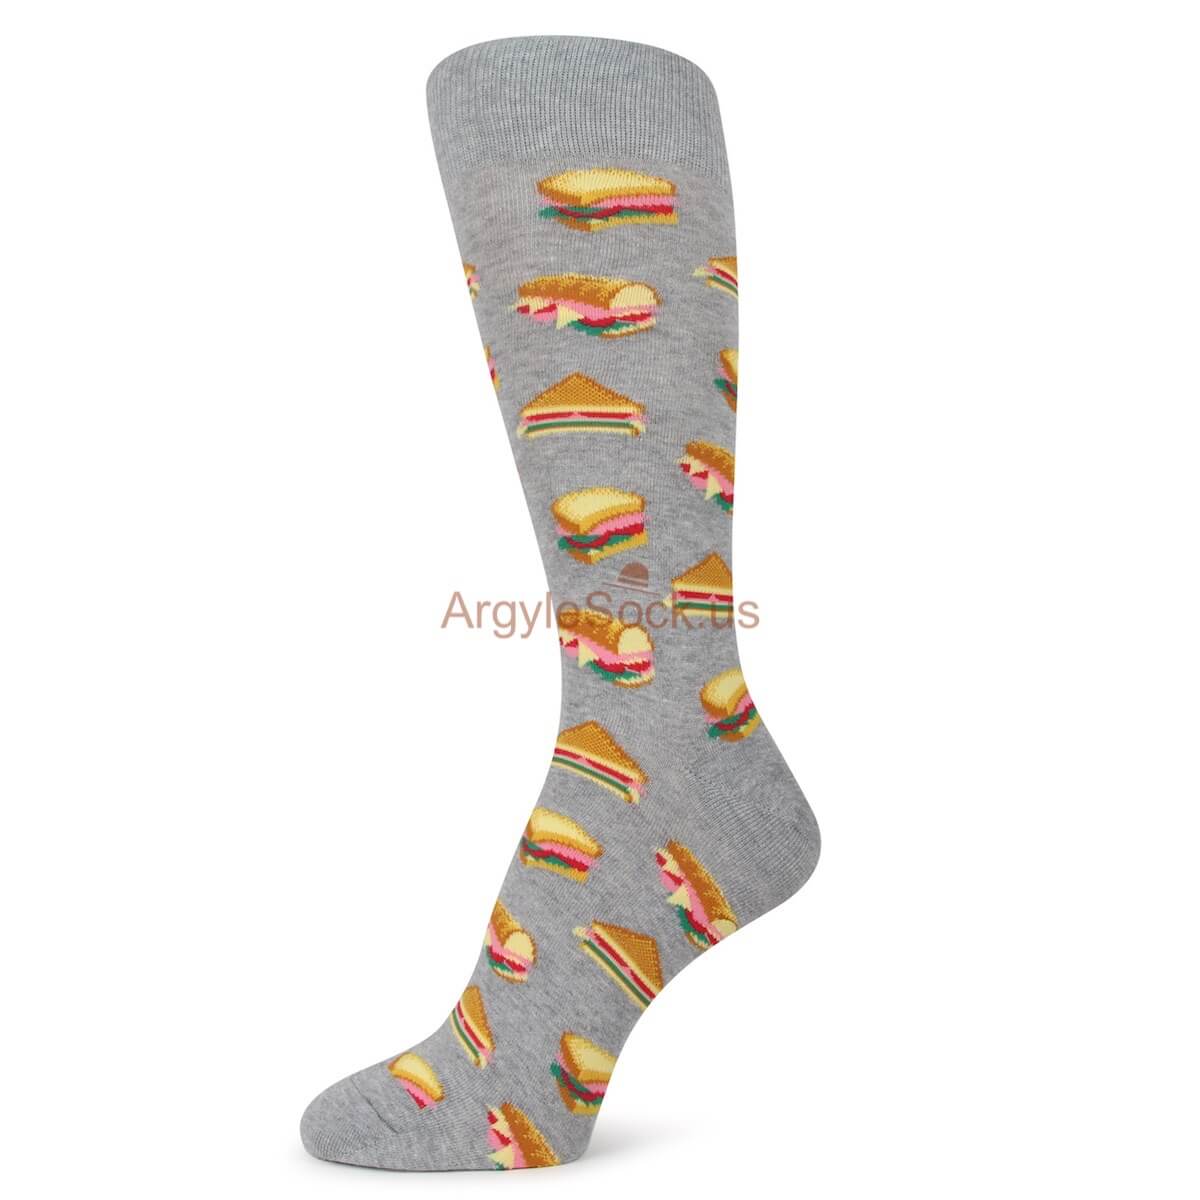 Clubhouse Sandwich Themed Socks for Men